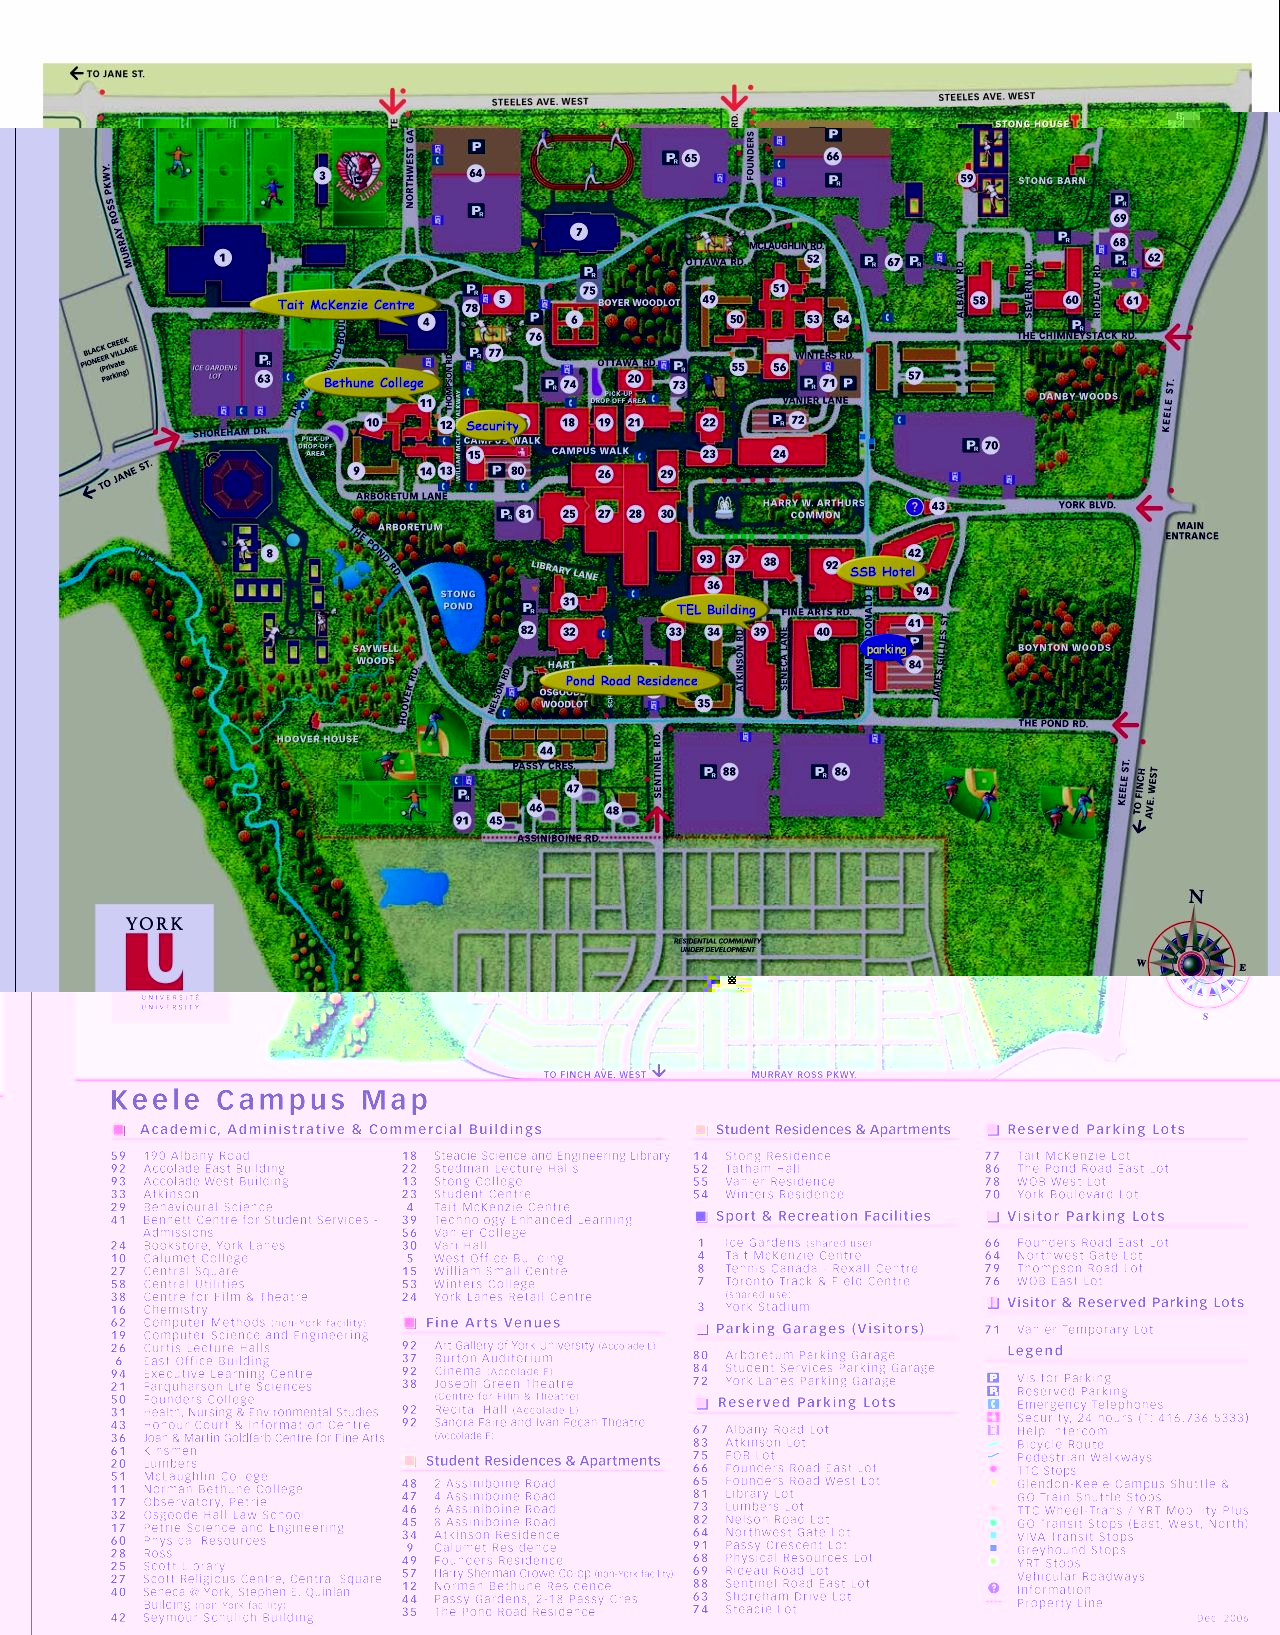 York University Building Map - BEST HOME DESIGN IDEAS